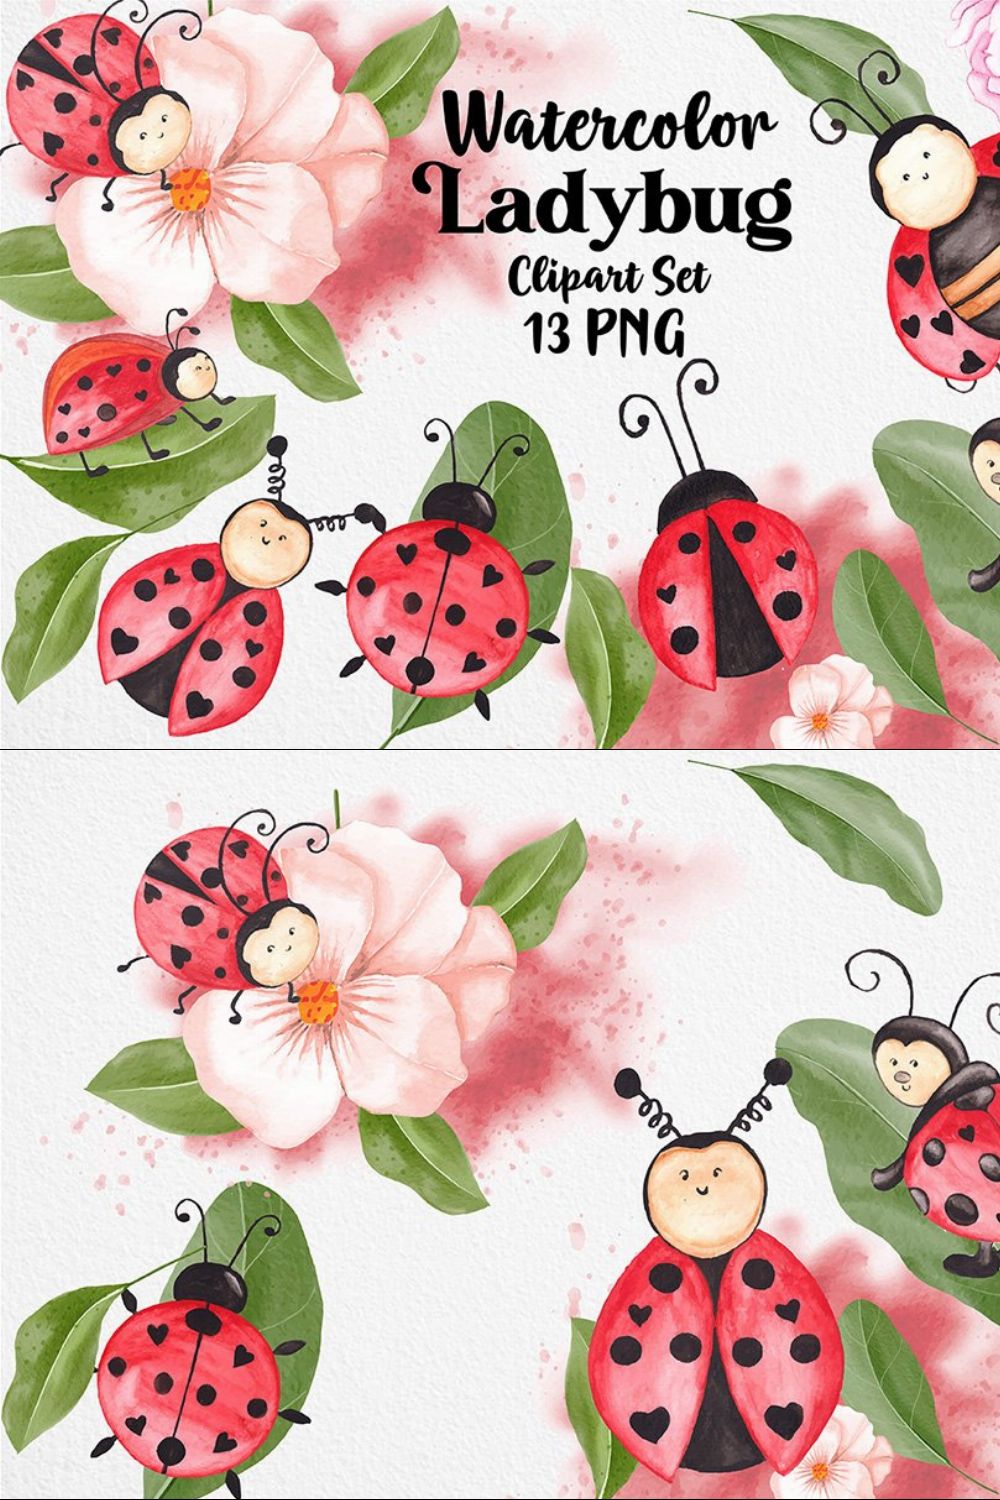 Watercolor Ladybug clipart set pinterest preview image.